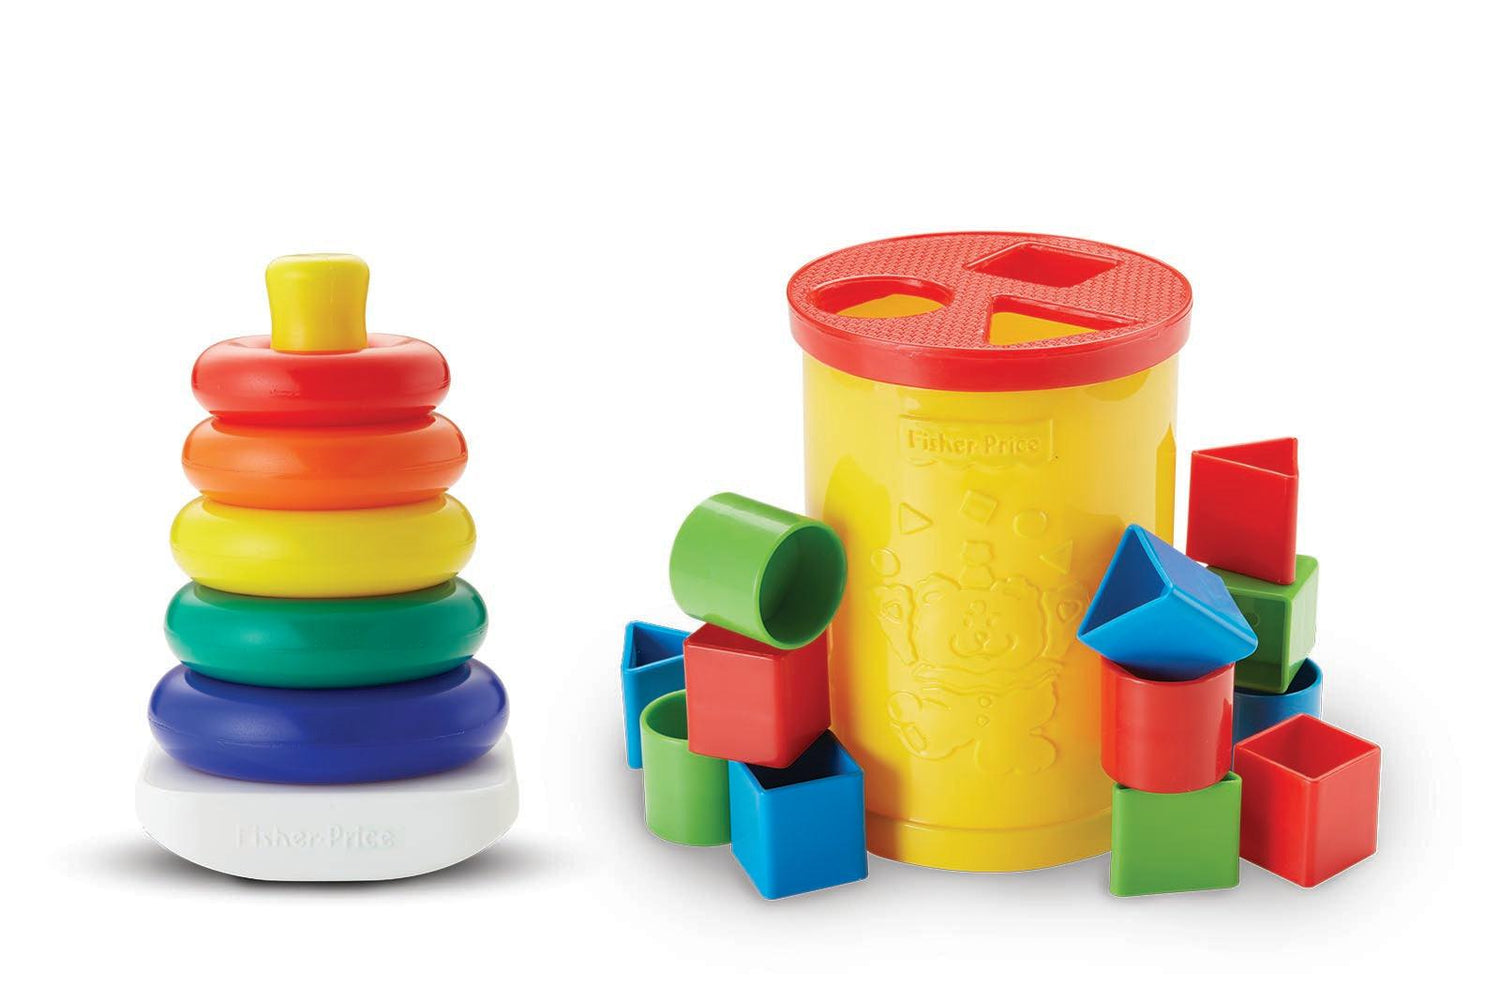 Fisher-Price 2-In-1 Infant Starter Giftpack | Sams toy - samstoy.in